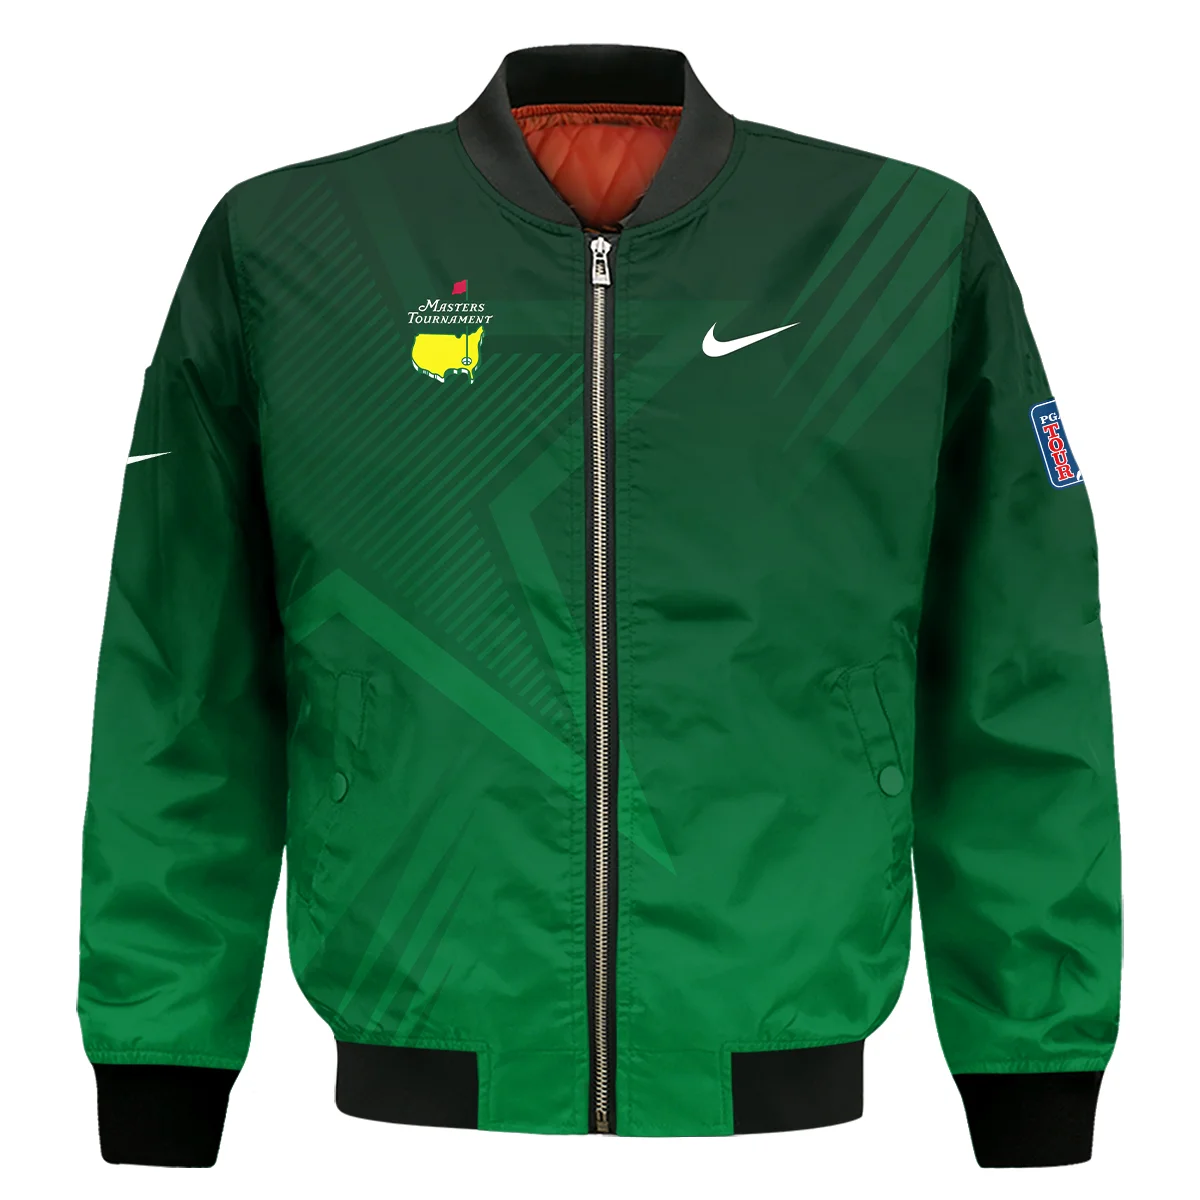 Nike Masters Tournament Polo Shirt Dark Green Gradient Star Pattern Golf Sports Sleeveless Jacket Style Classic Sleeveless Jacket